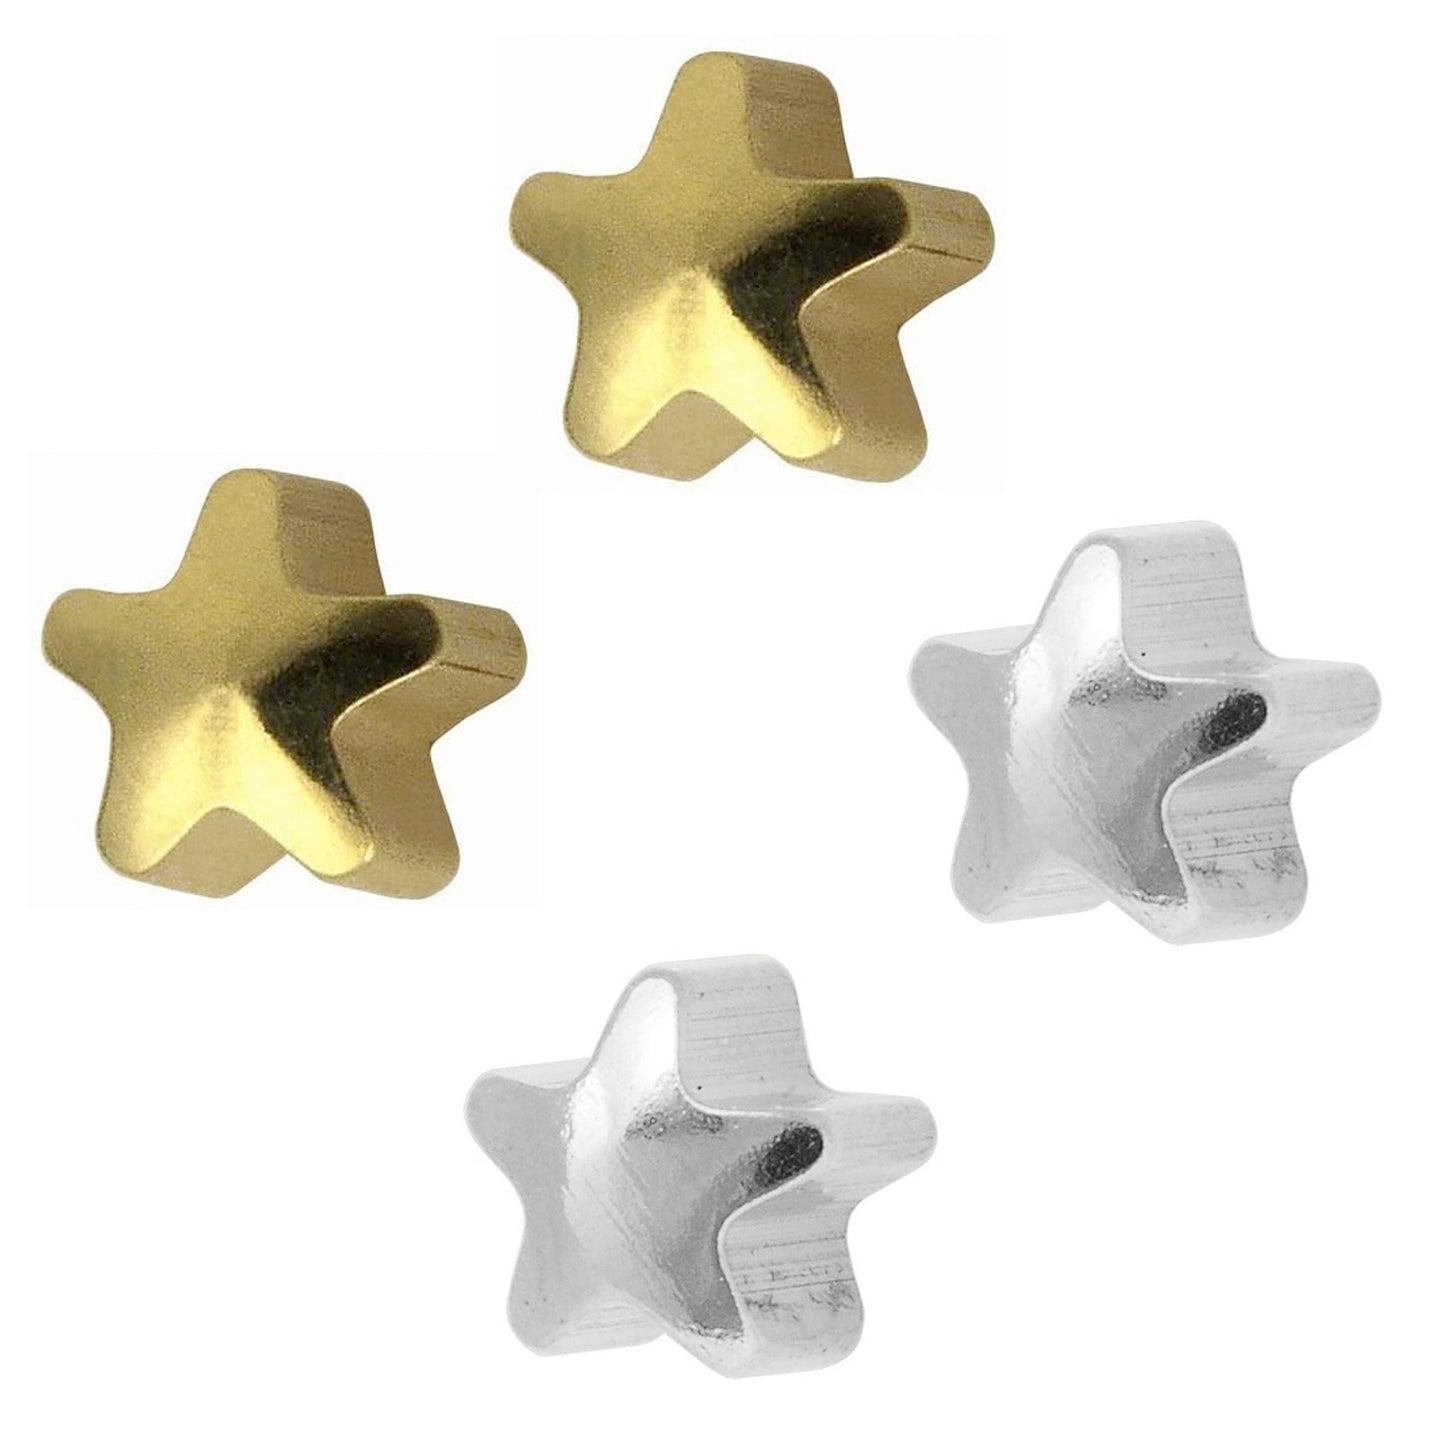 STUDEX Regular Gold Plated Stainless Steel Star Shape Earring